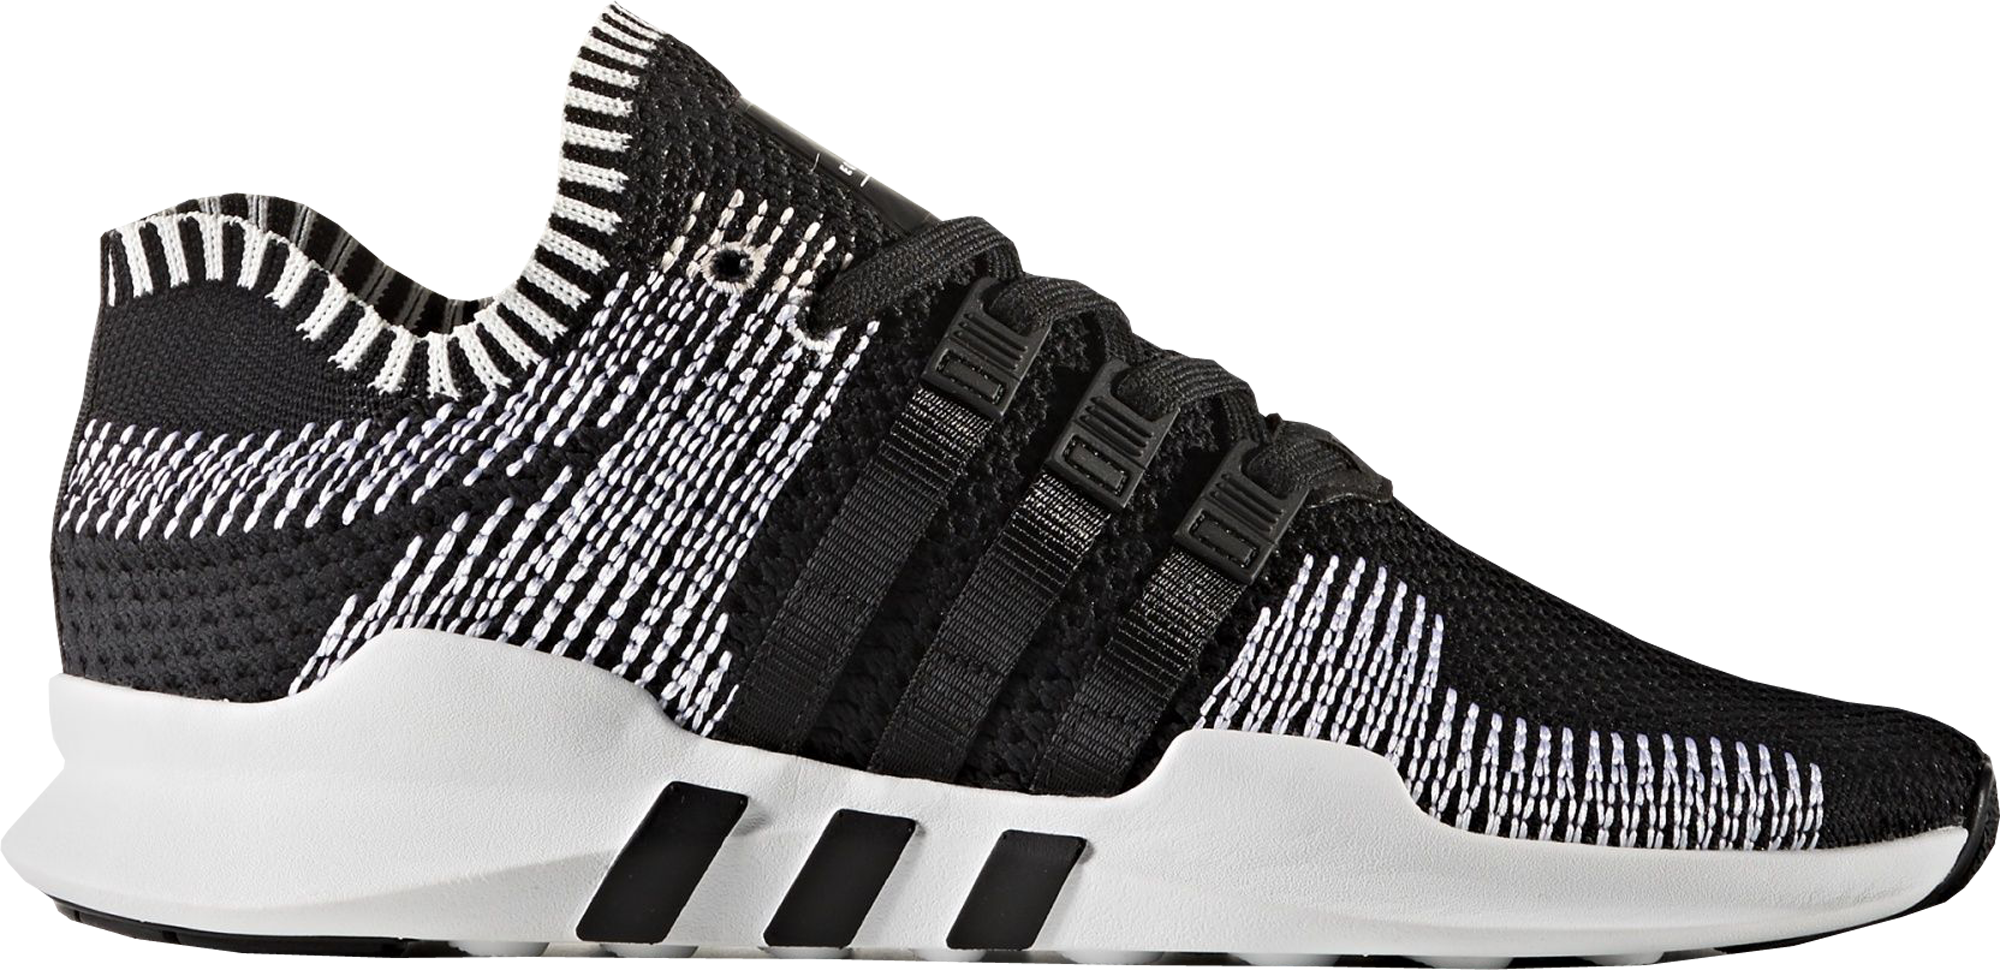 black and white eqt adidas